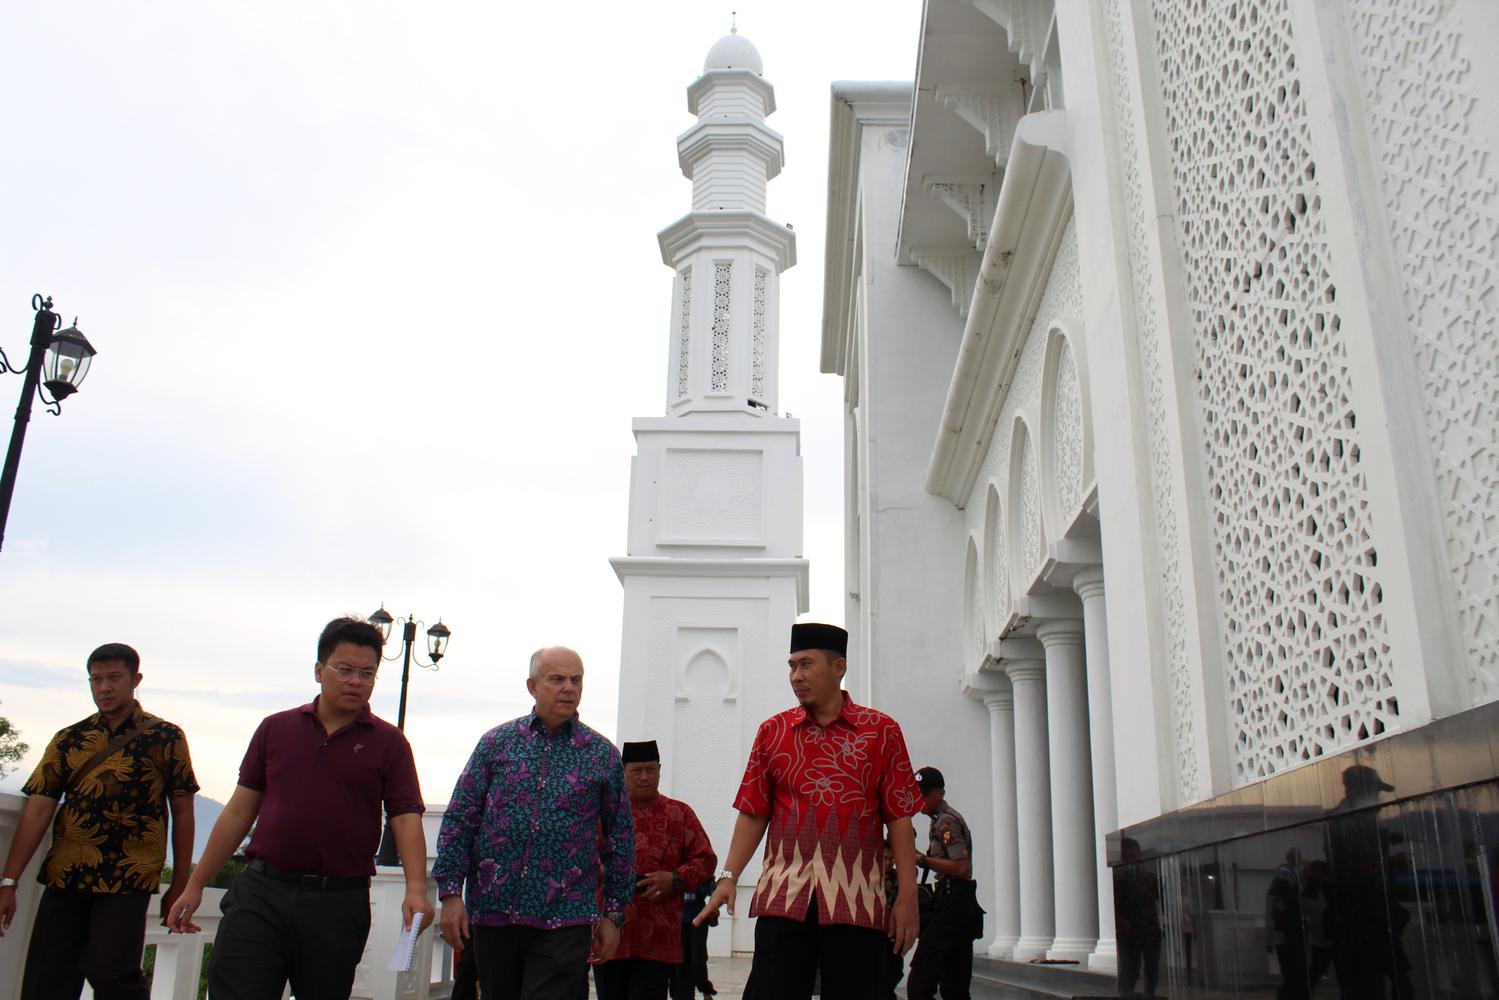 Ilustrasi, kegiatan di masjid. PT Pembangunan Jaya Ancol Tbk membangun Masjid Terapung di Taman Impian Jaya Ancol,Jakarta. Masjid tersebut akan menjadi ikon baru Kota Jakarta.